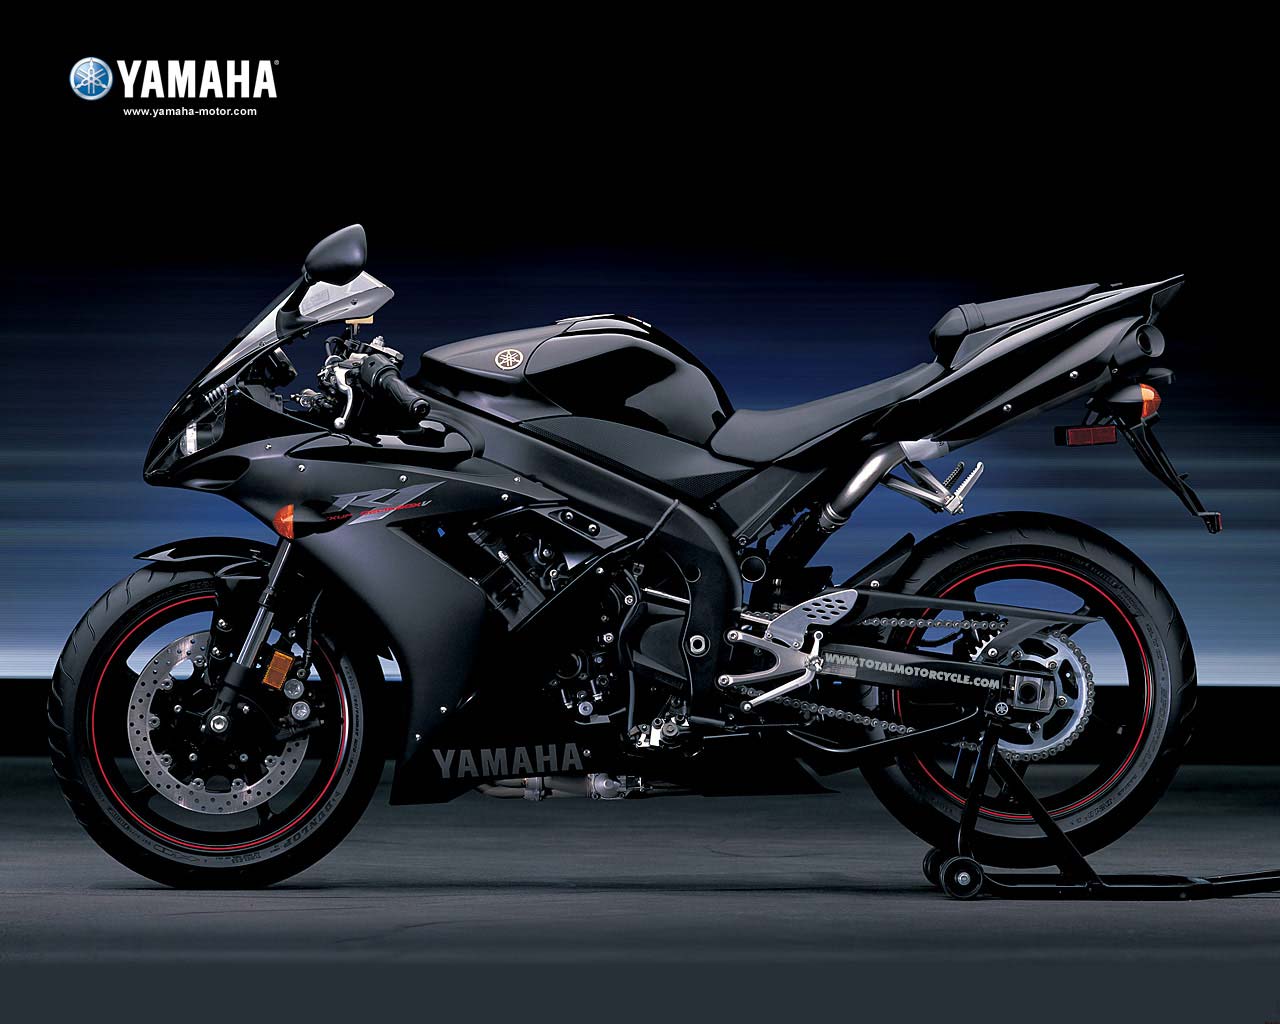 yamaha motorcycleclass=yamaha motorcycle